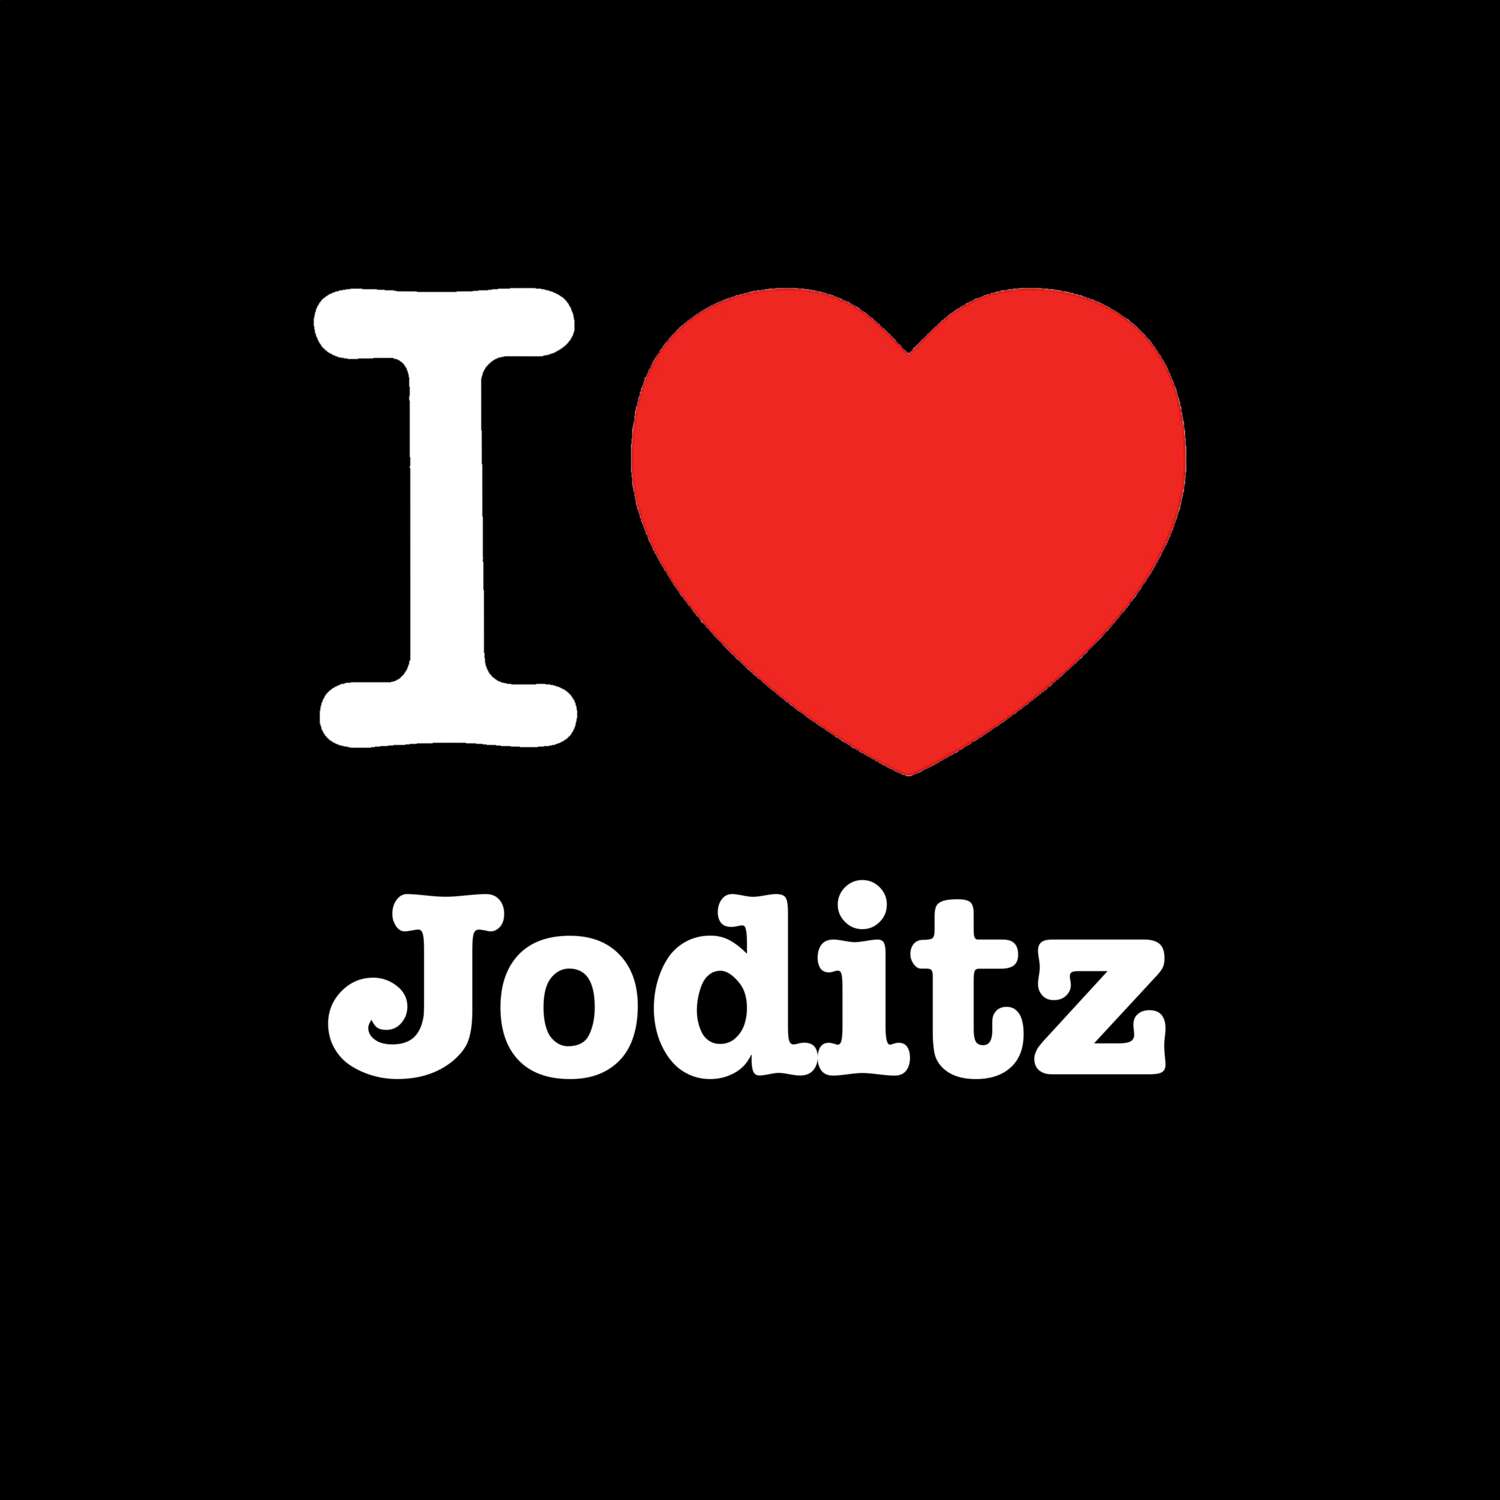 Joditz T-Shirt »I love«